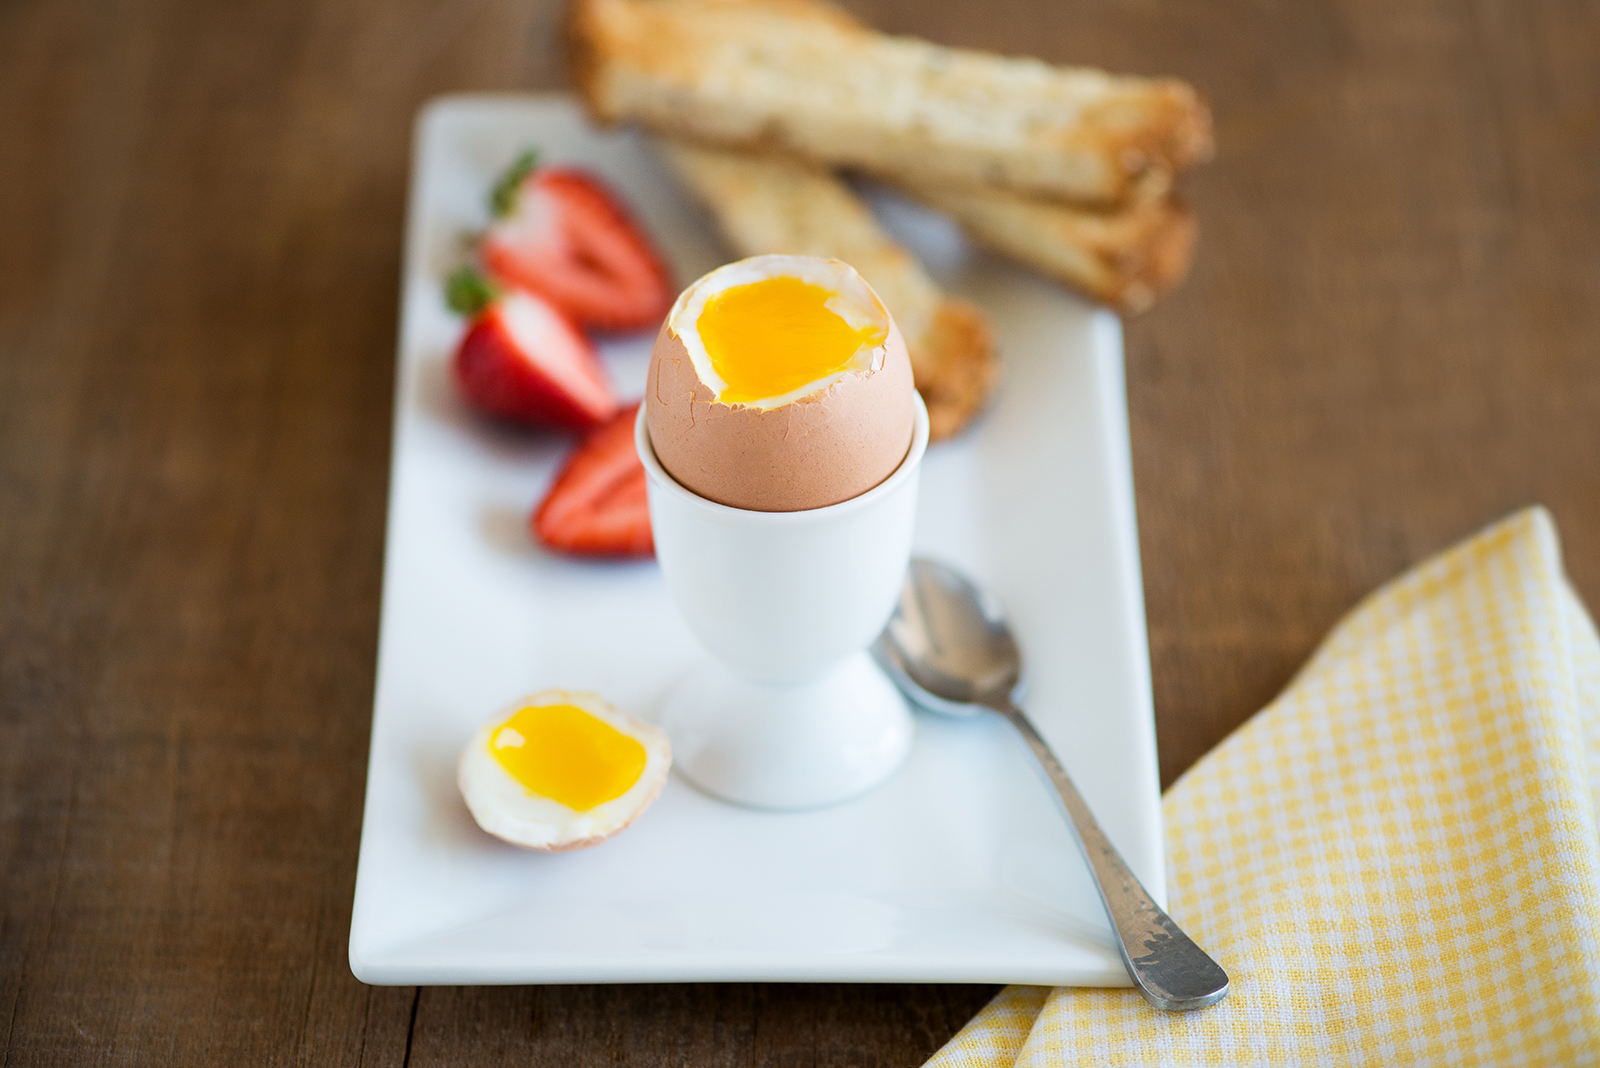 https://www.eggs.ca/assets/RecipePhotos/Soft-Cooked-Eggs-022.jpg